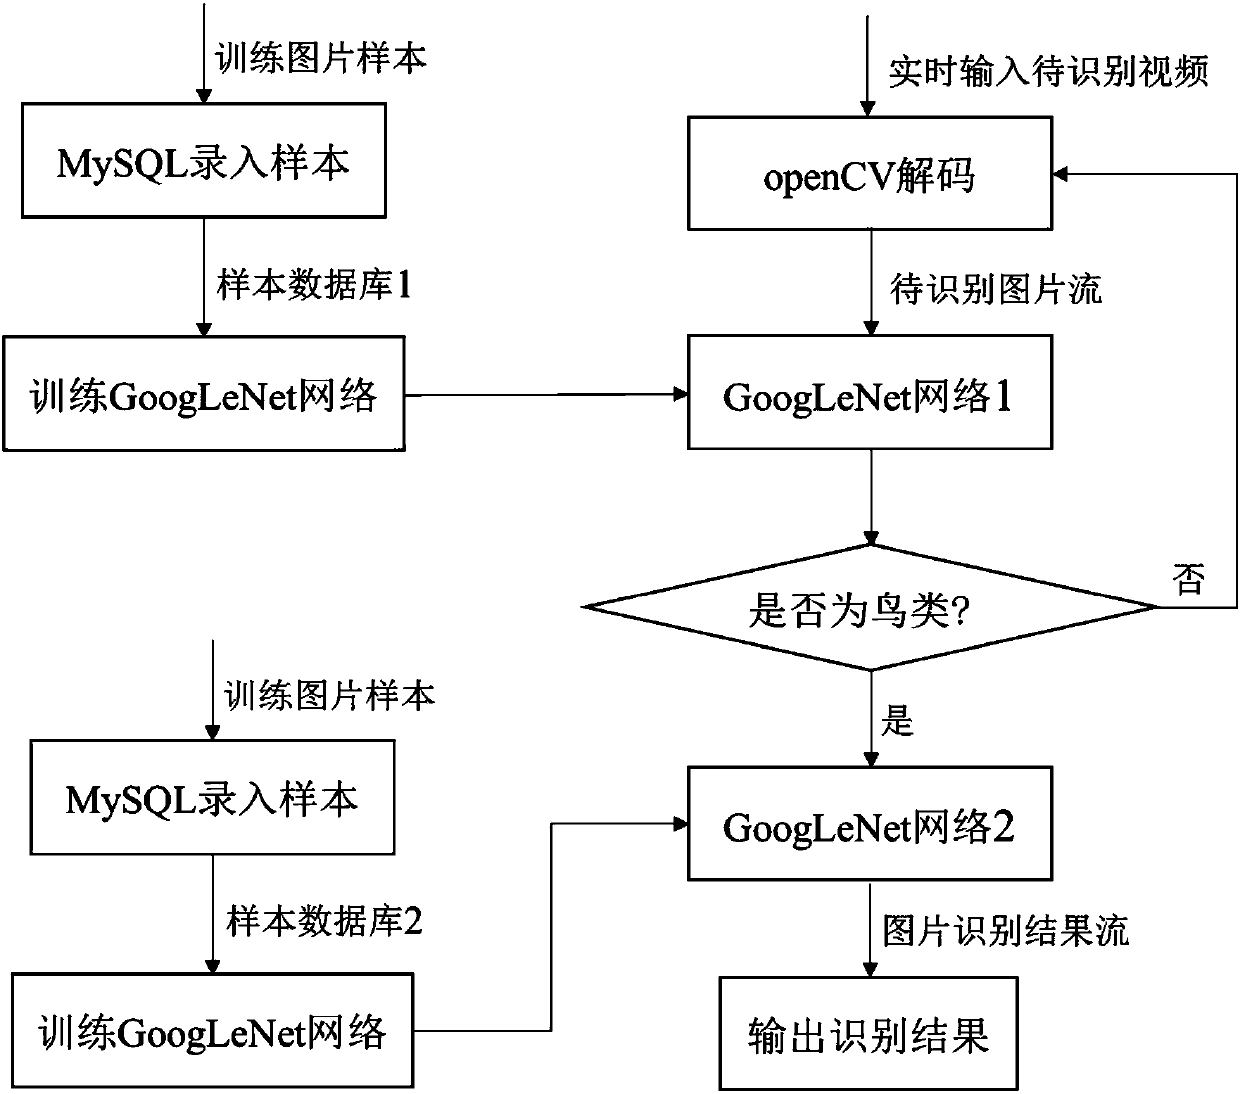 Bird population recognition and analysis method based on GoogLeNet network model